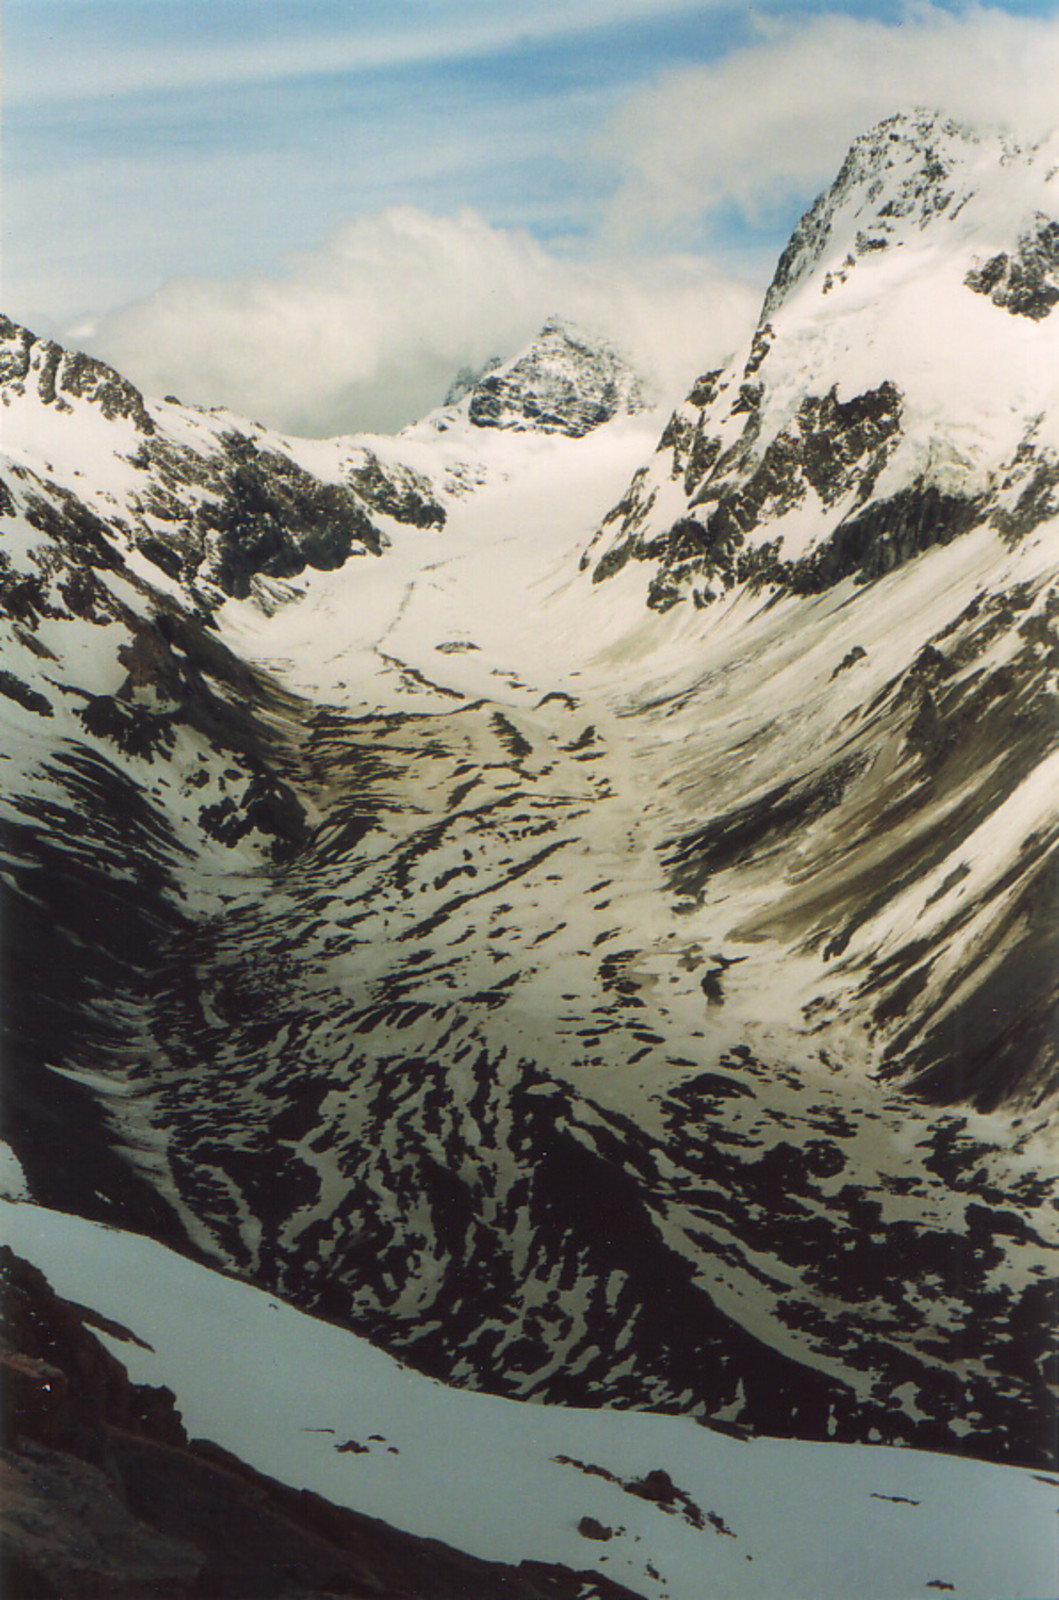 Mueller Glacier from the peak of Mt Ollivier